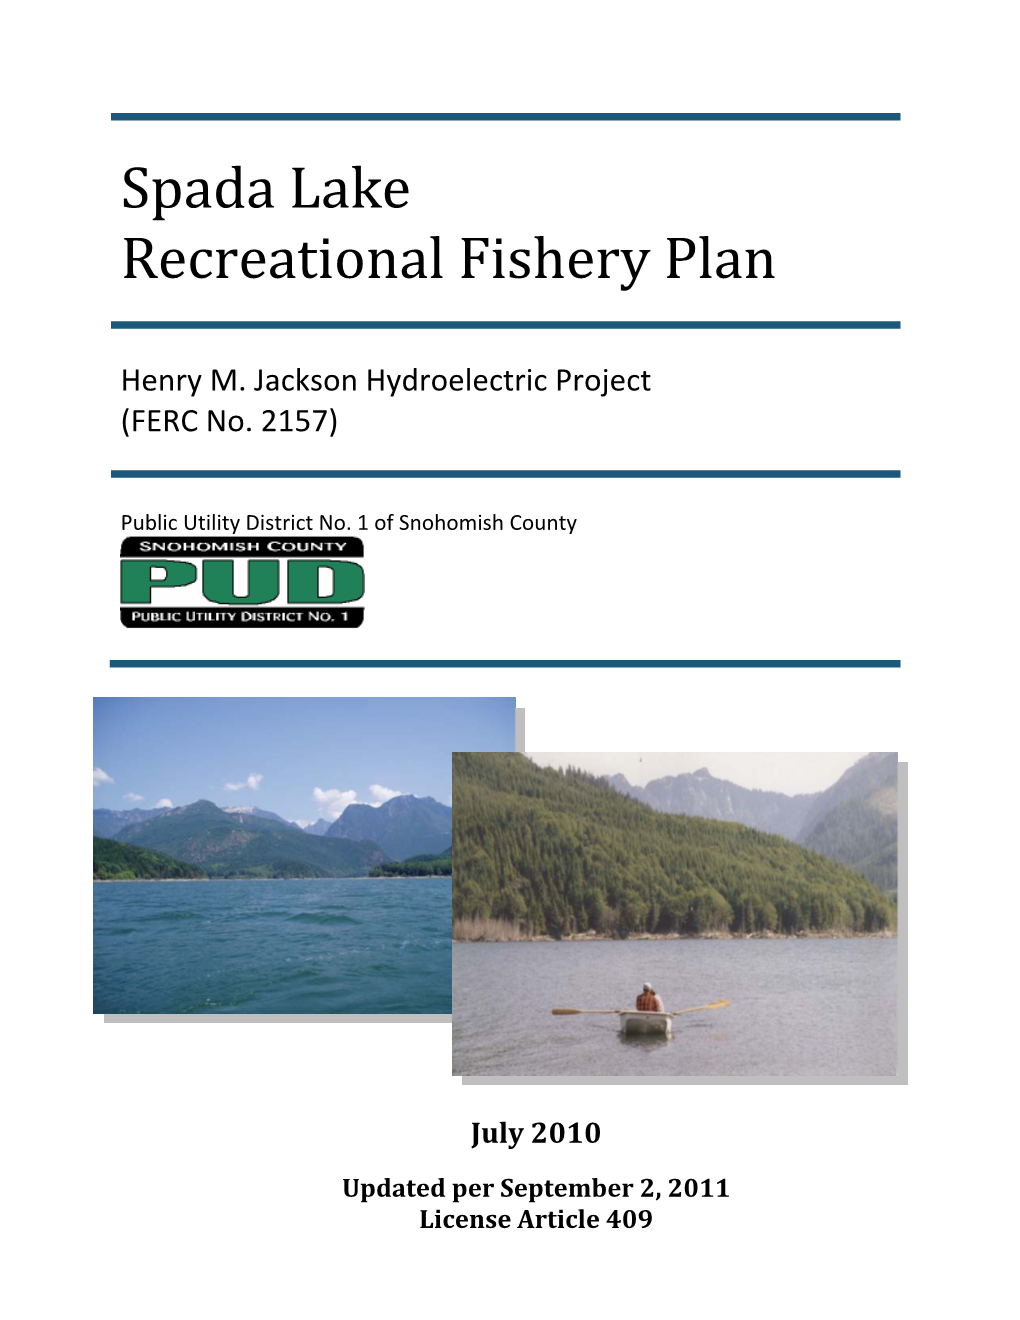 Spada Lake Recreational Fishery Plan